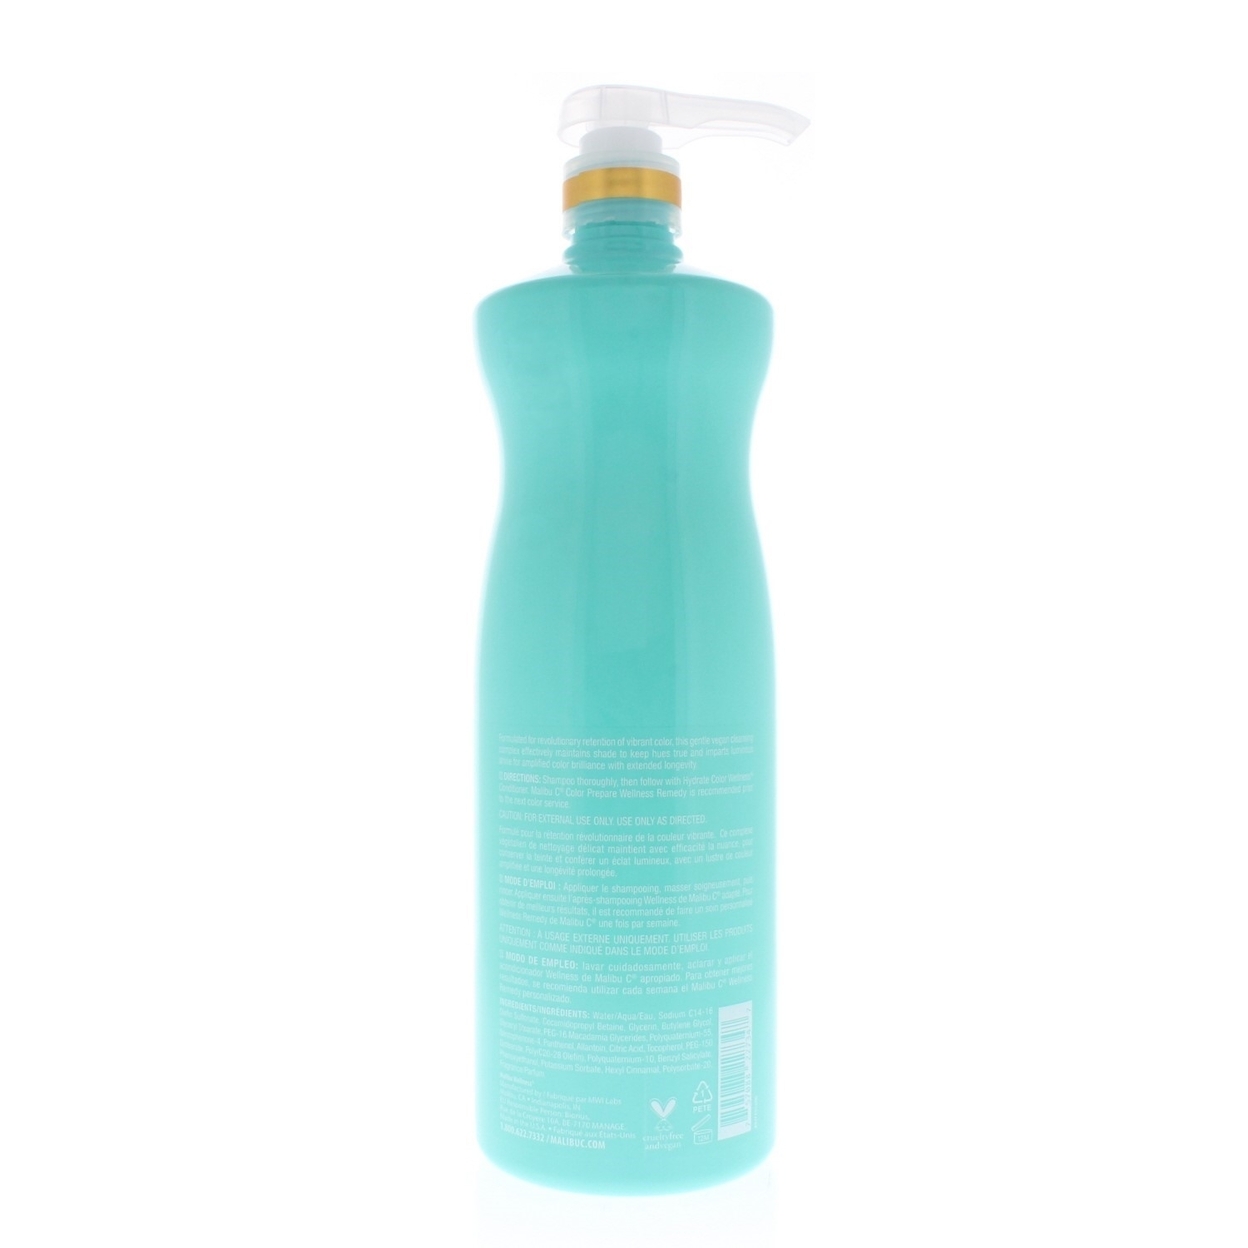 Malibu C Hydrate Color Wellness Shampoo 33.8oz/1 Liter